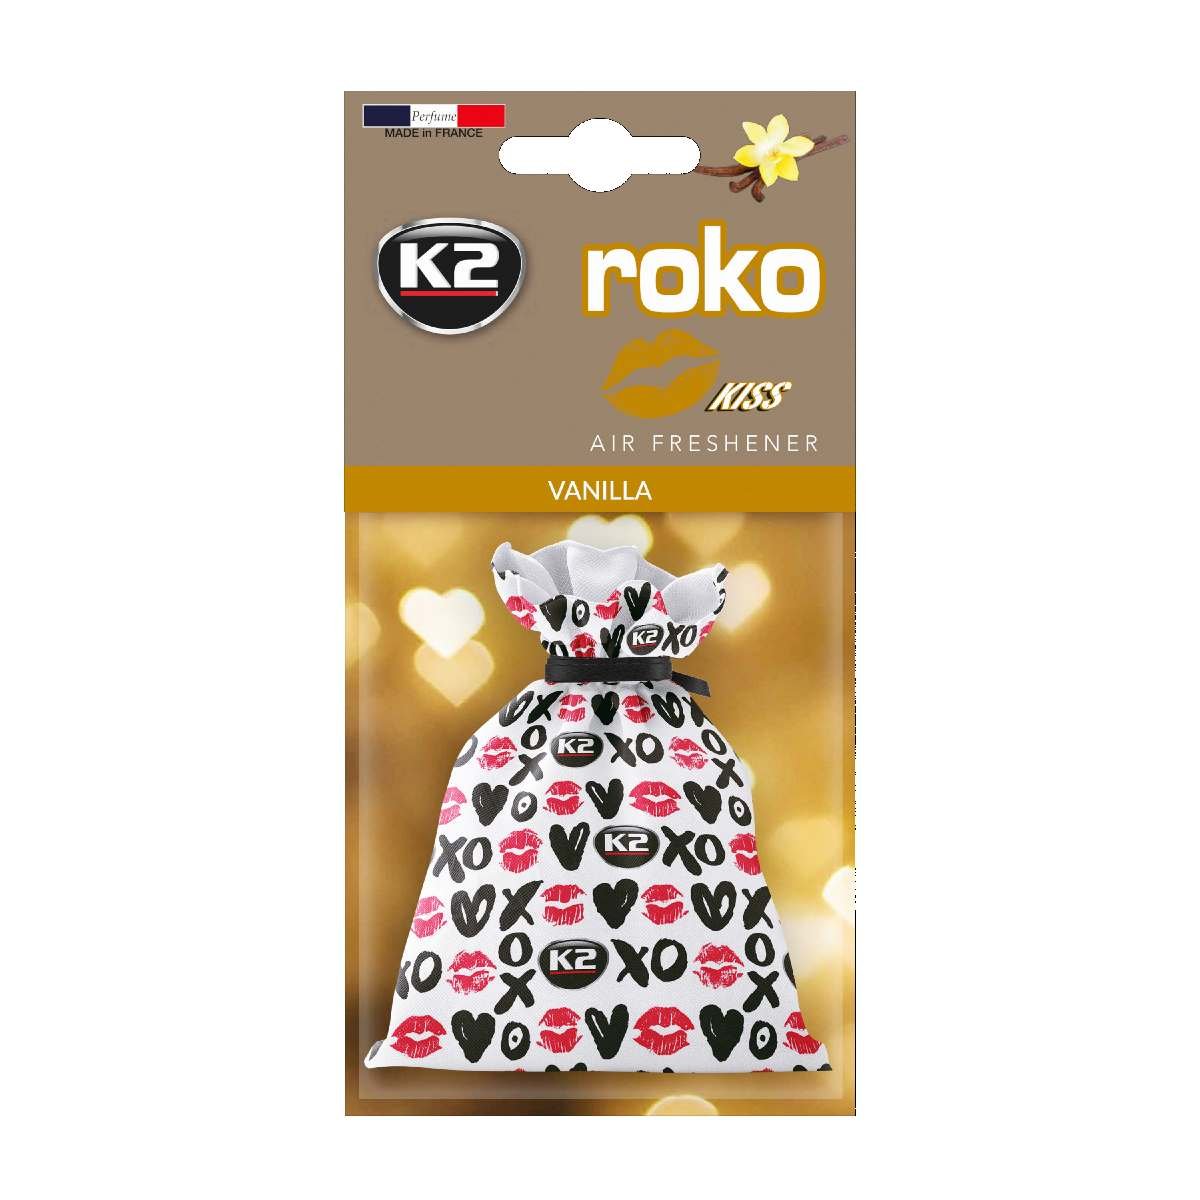 Air fresheners Air freshener ROKO KISS Vanilla 25G  Art. K2V827K